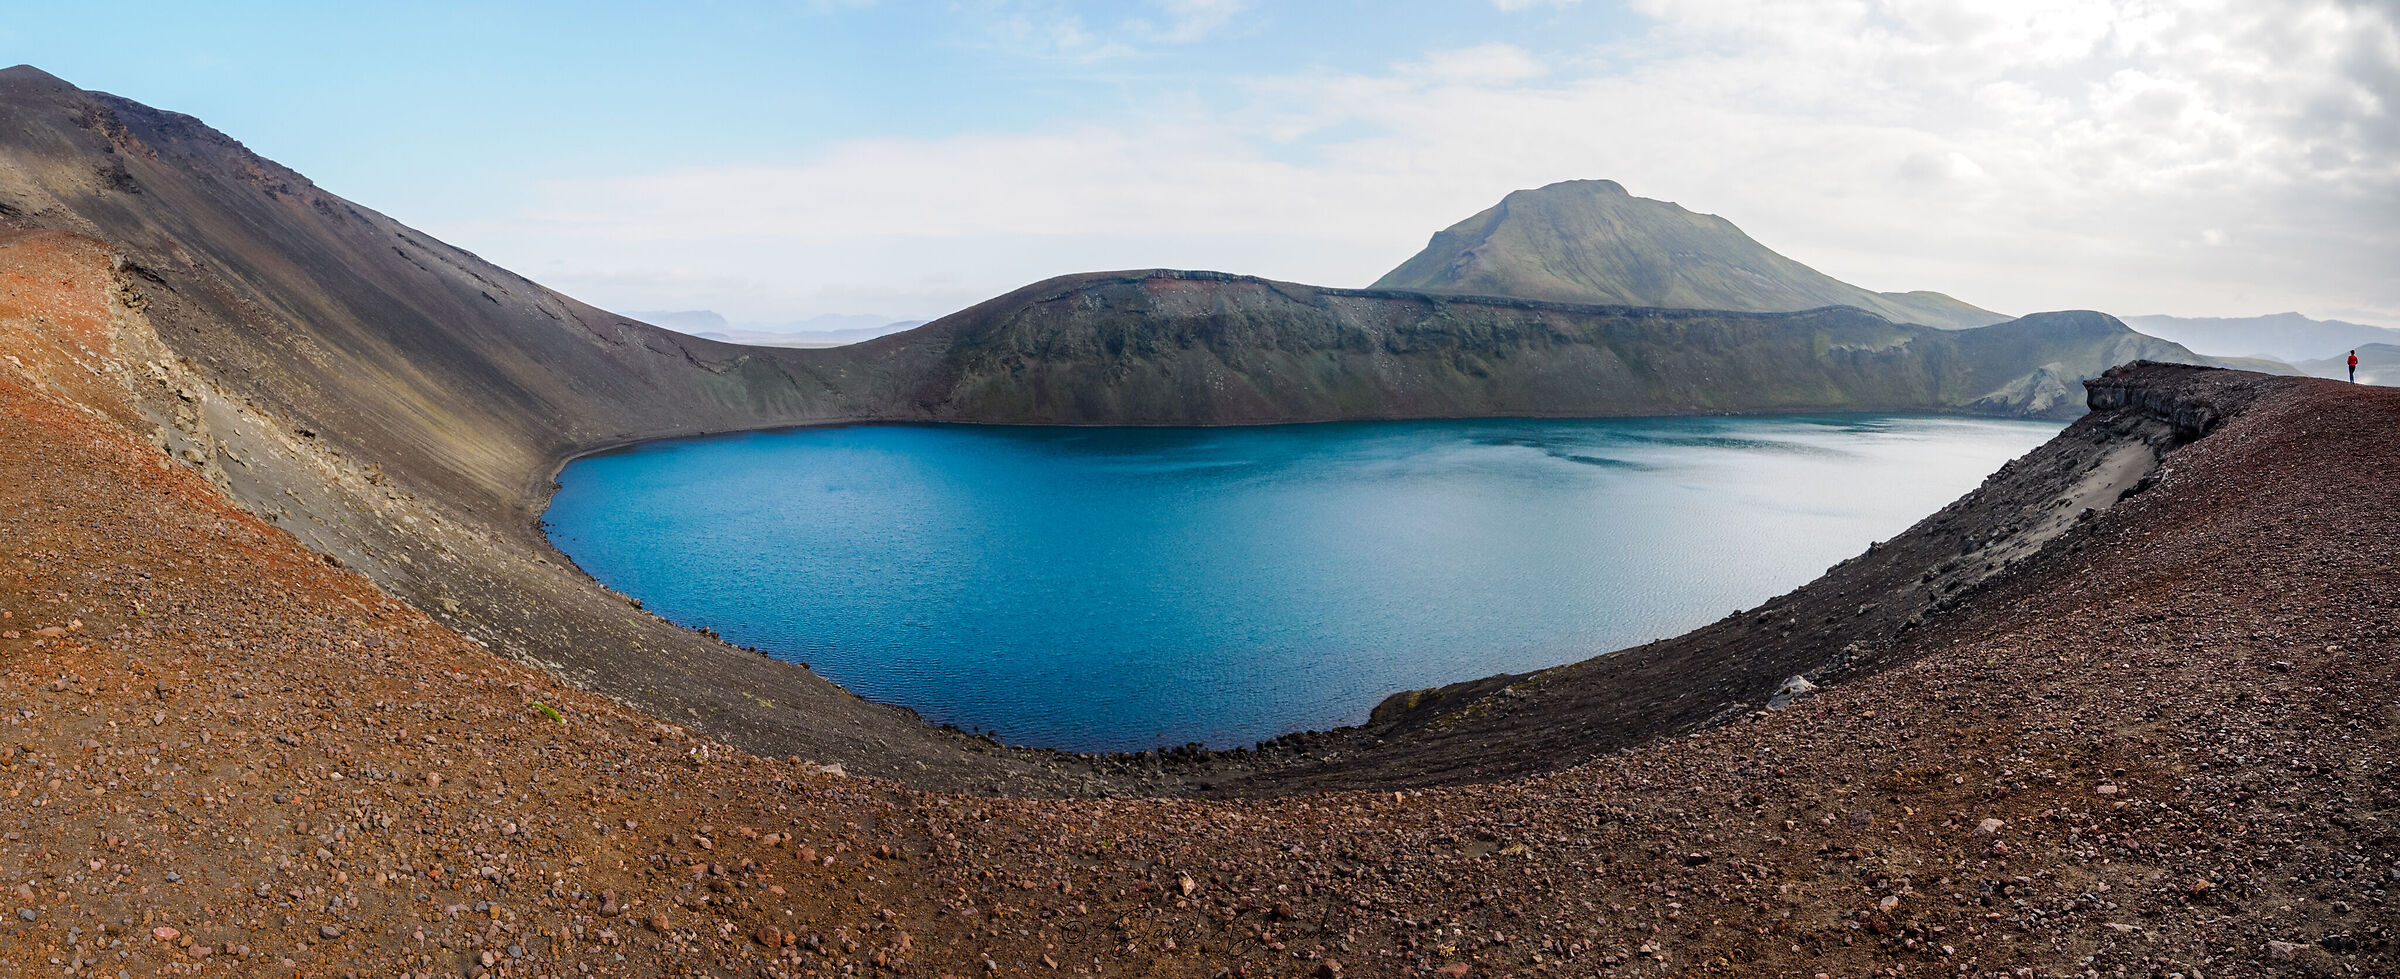 Lago nel cratere...